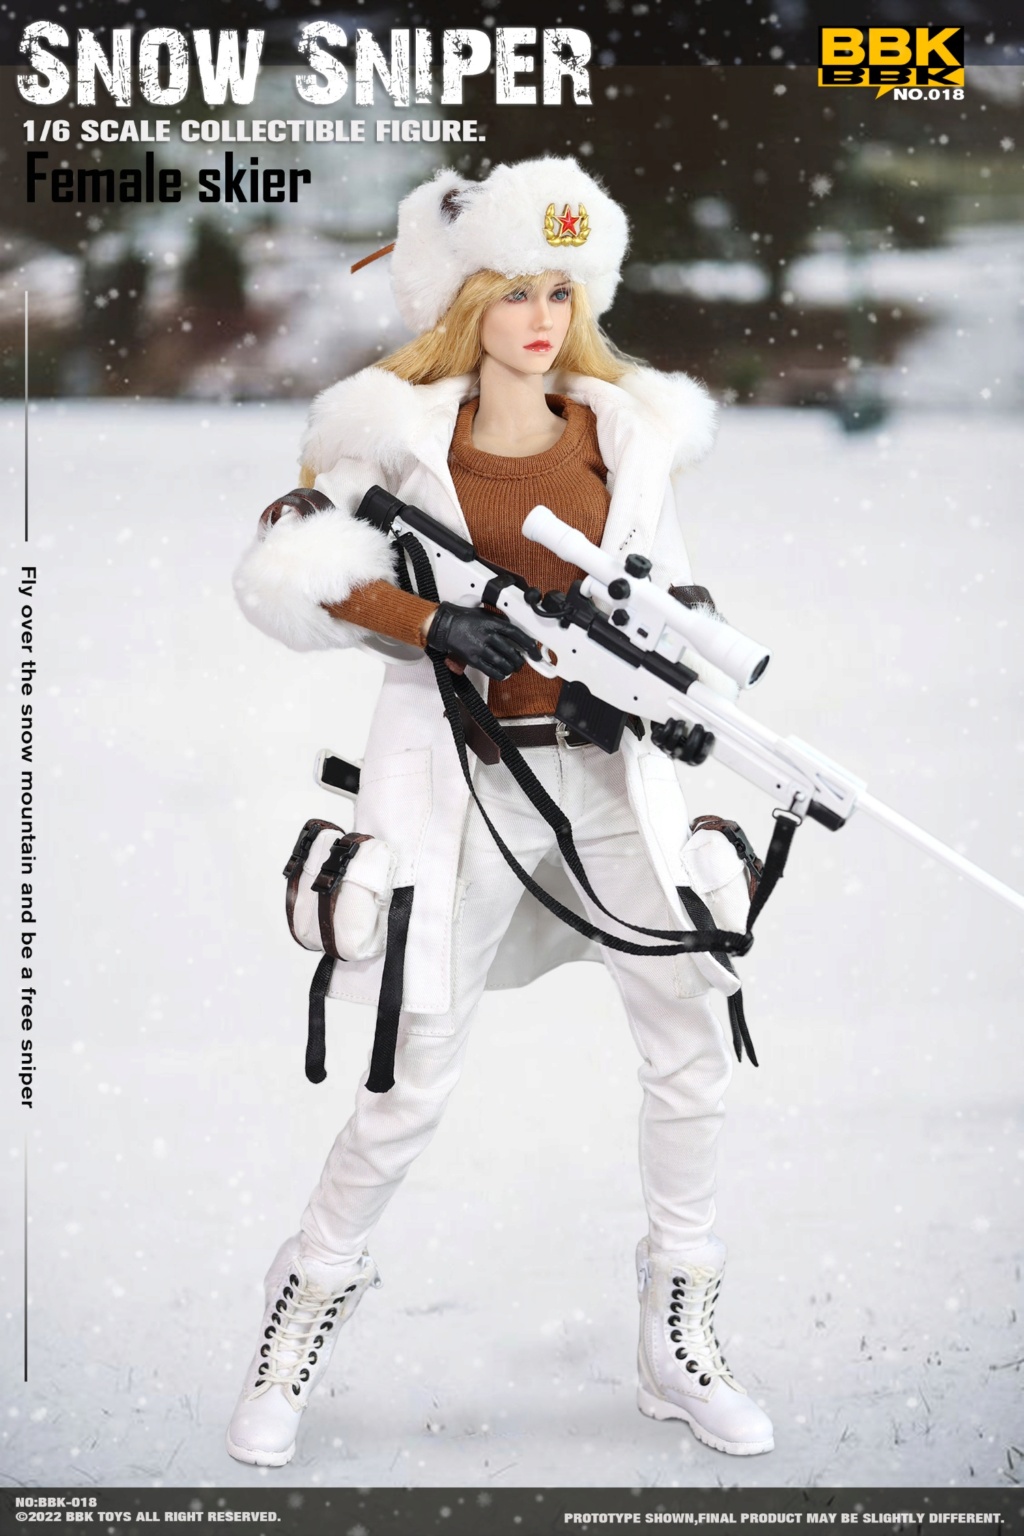 SnowSniper - NEW PRODUCT: BBK: BBK018 1/6 Scale Snow Sniper (Female Skier) 4698bf10